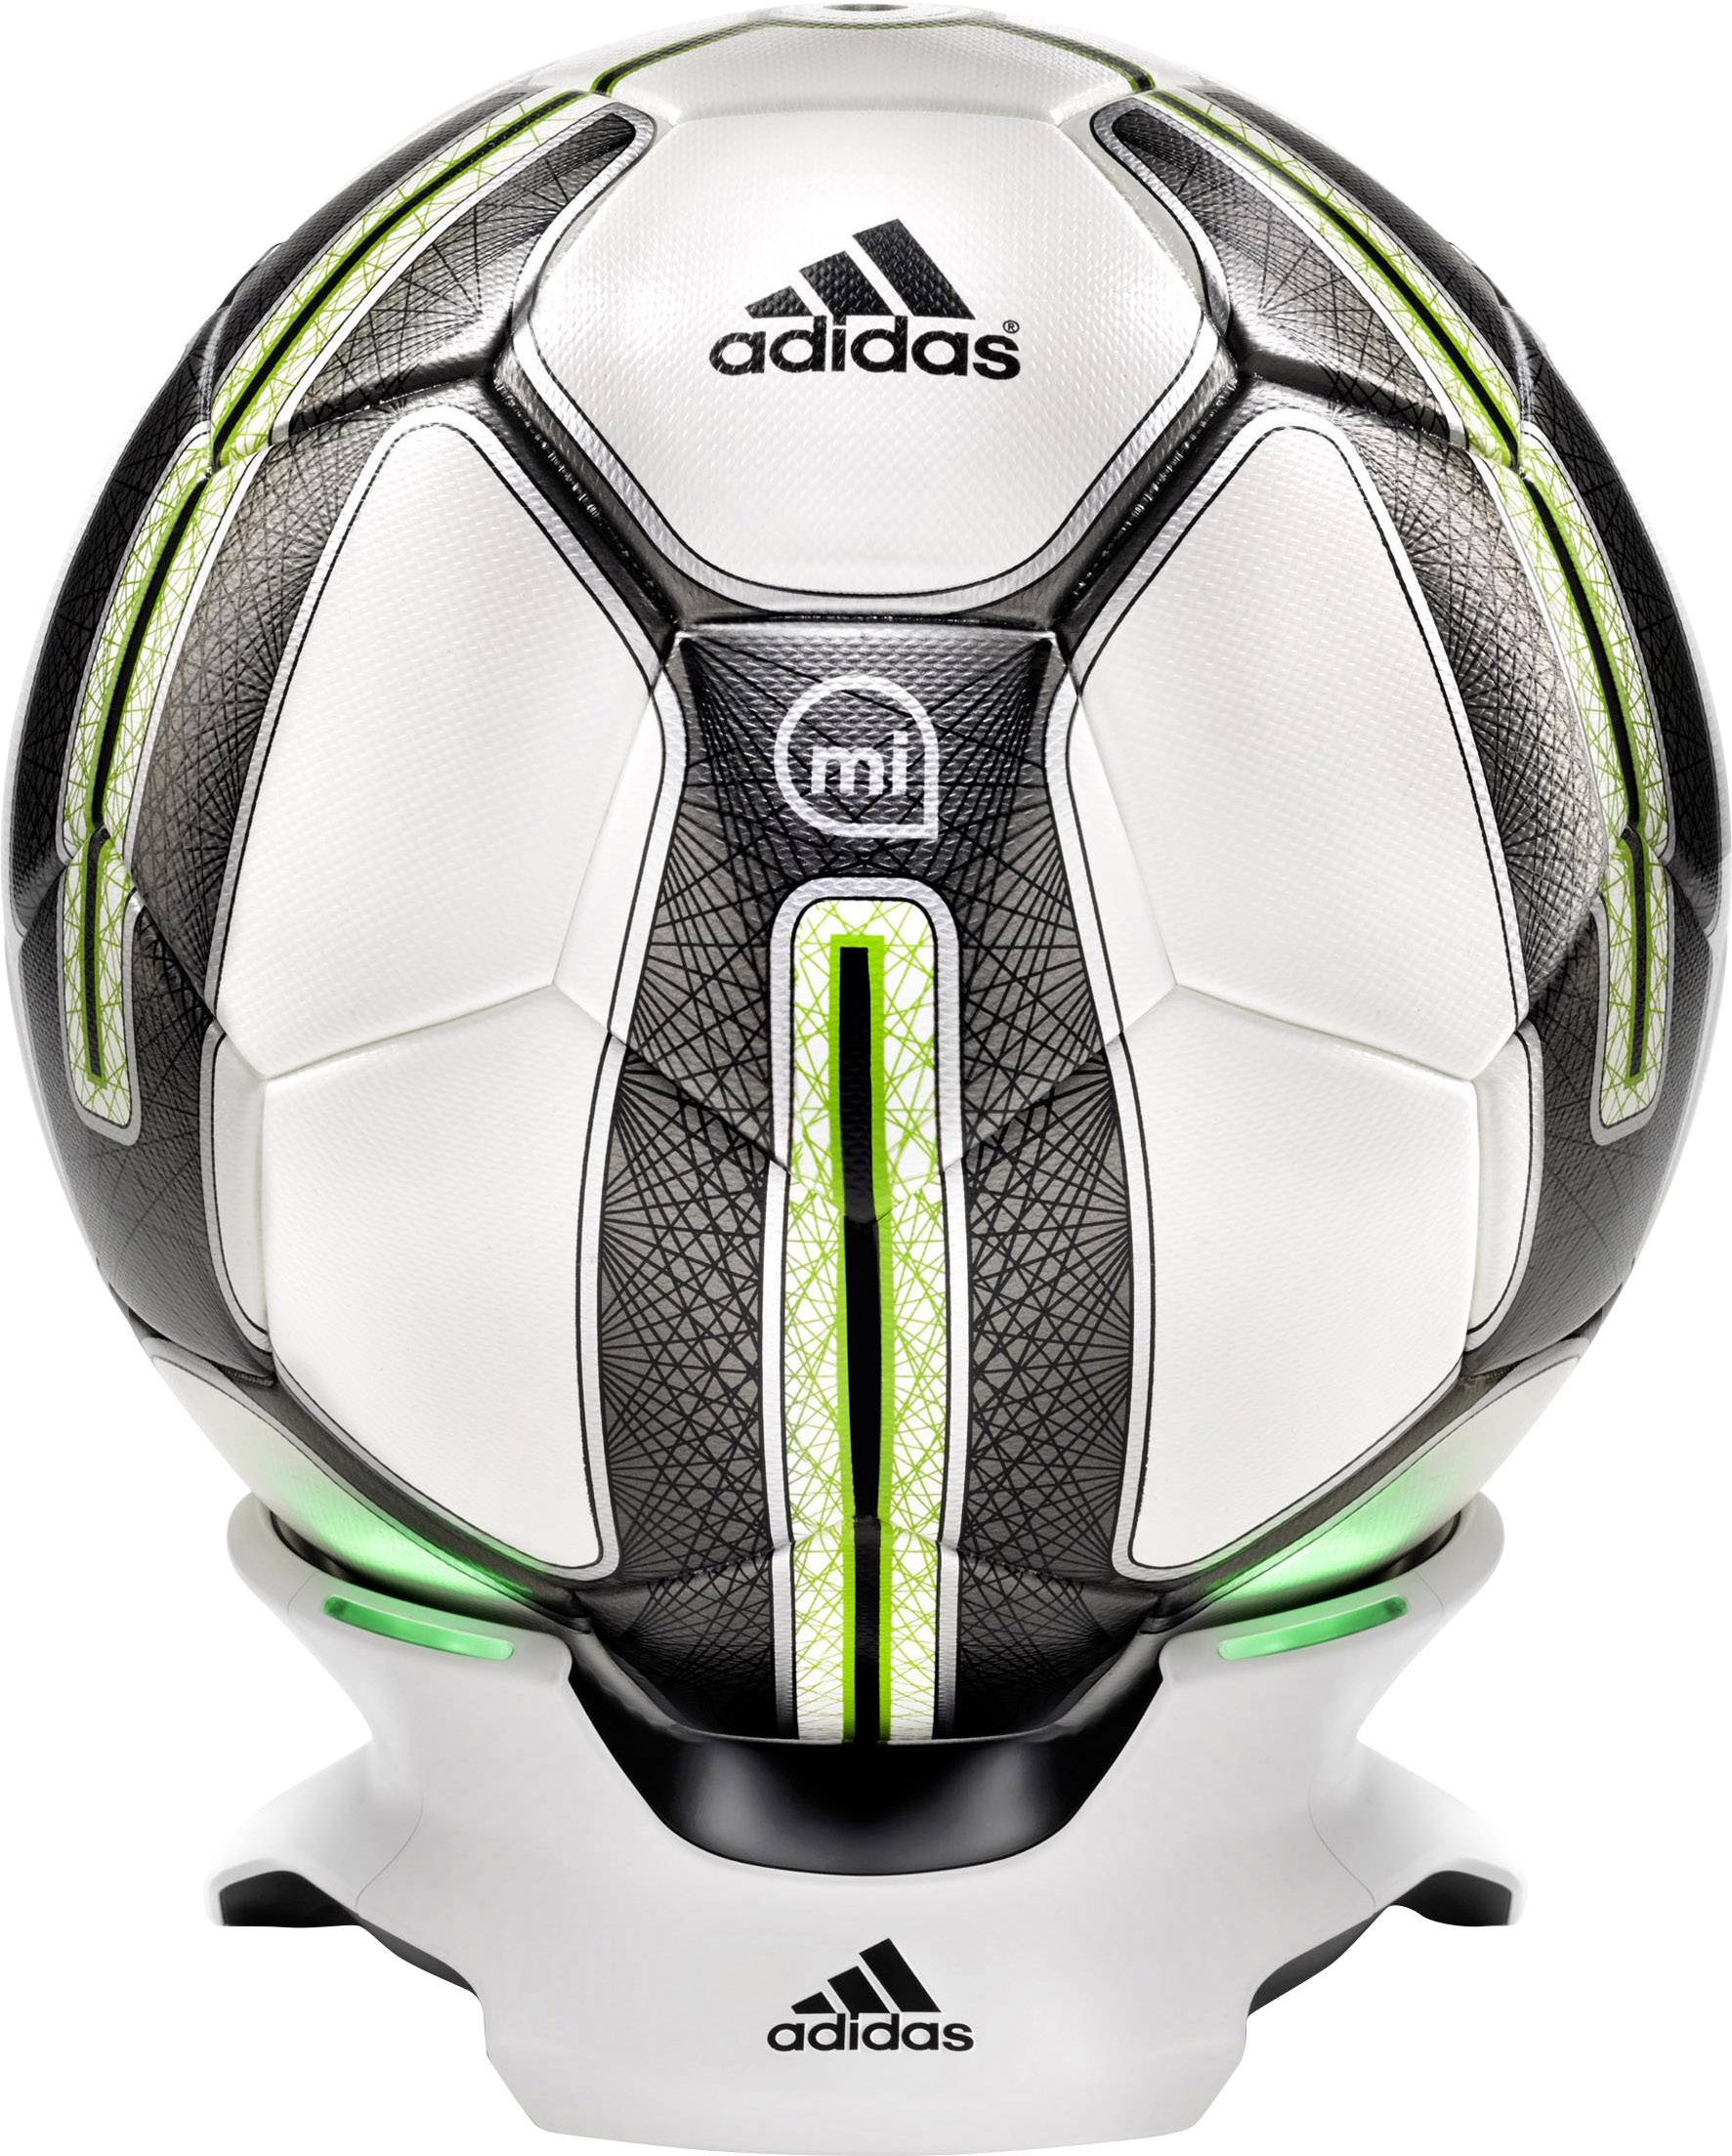 adidas micoach smart ball